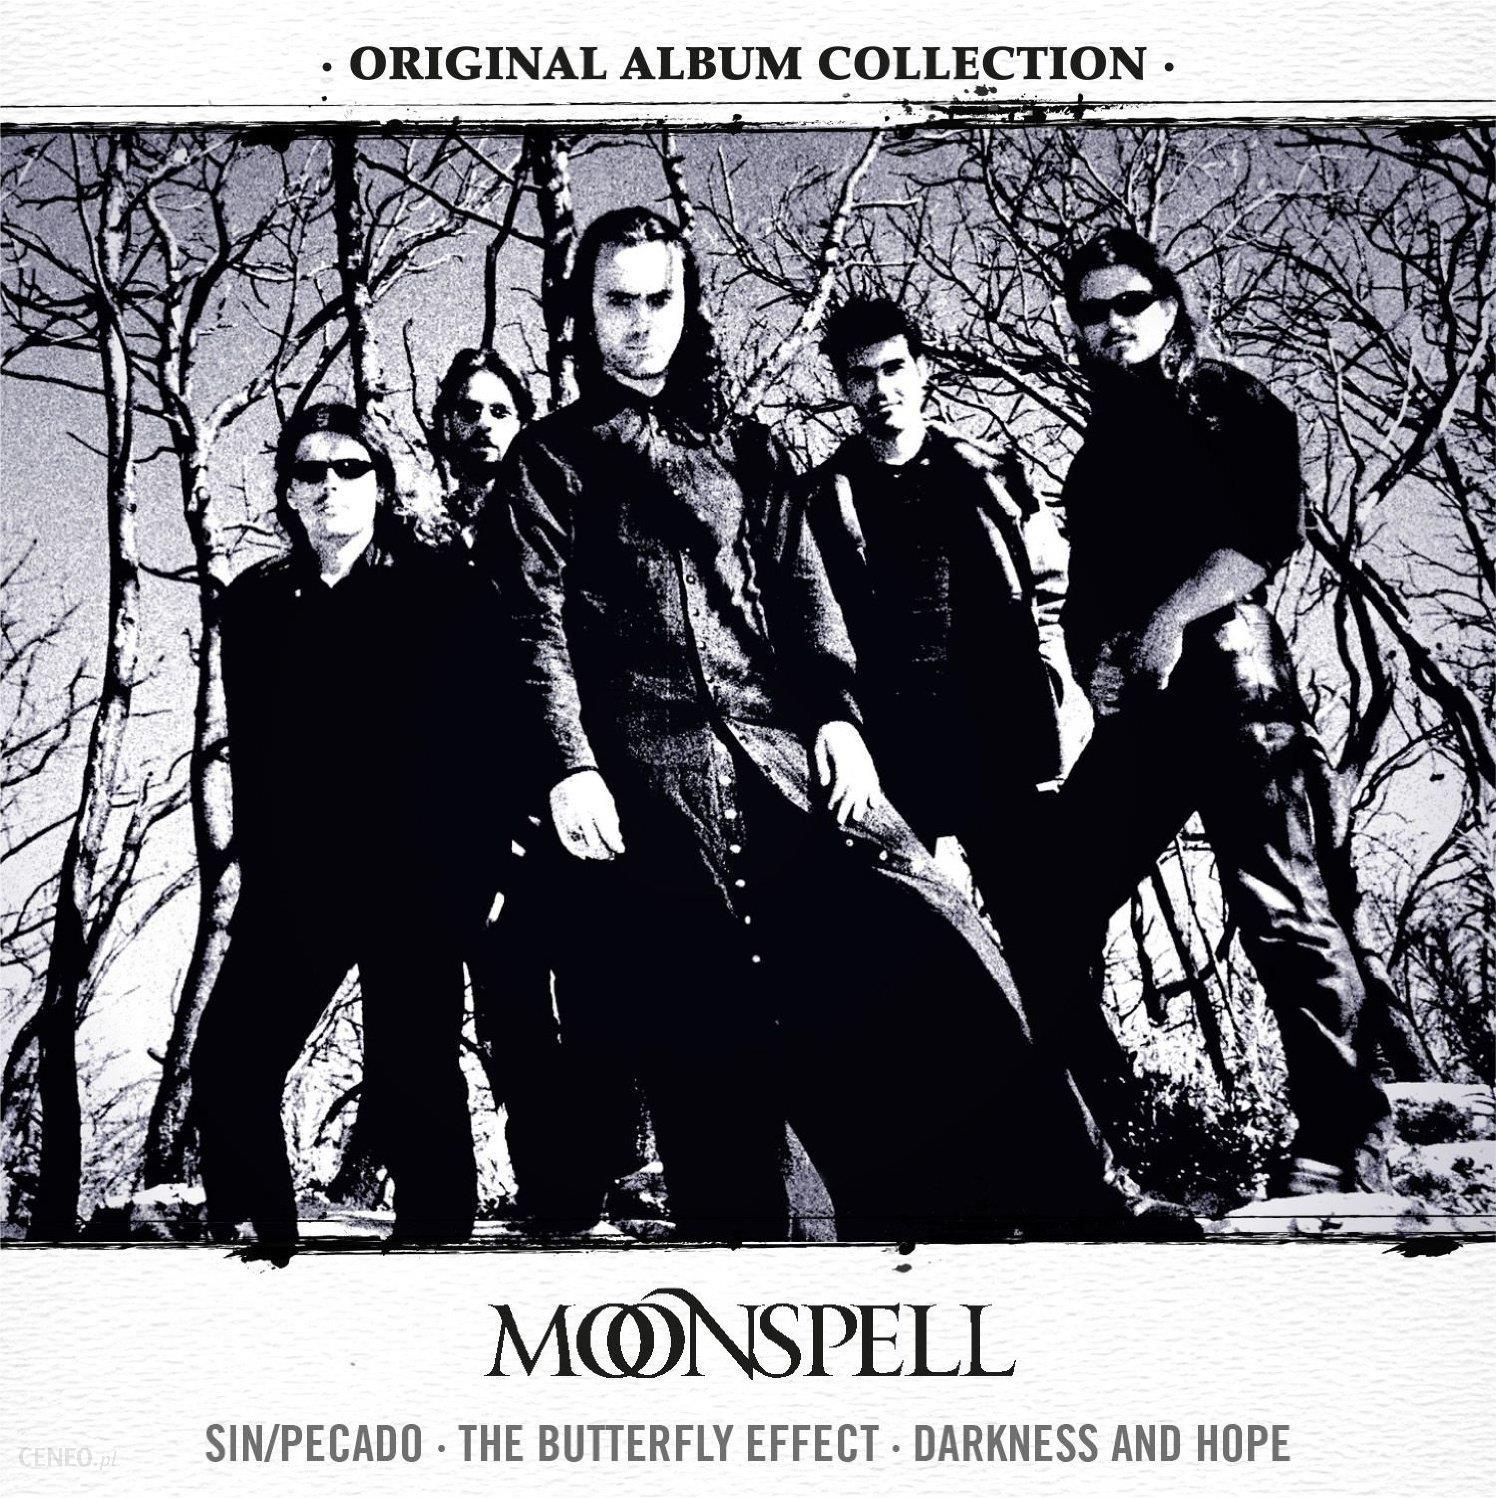 Płyta kompaktowa Moonspell - Original Album Collection (Limited Edition ...